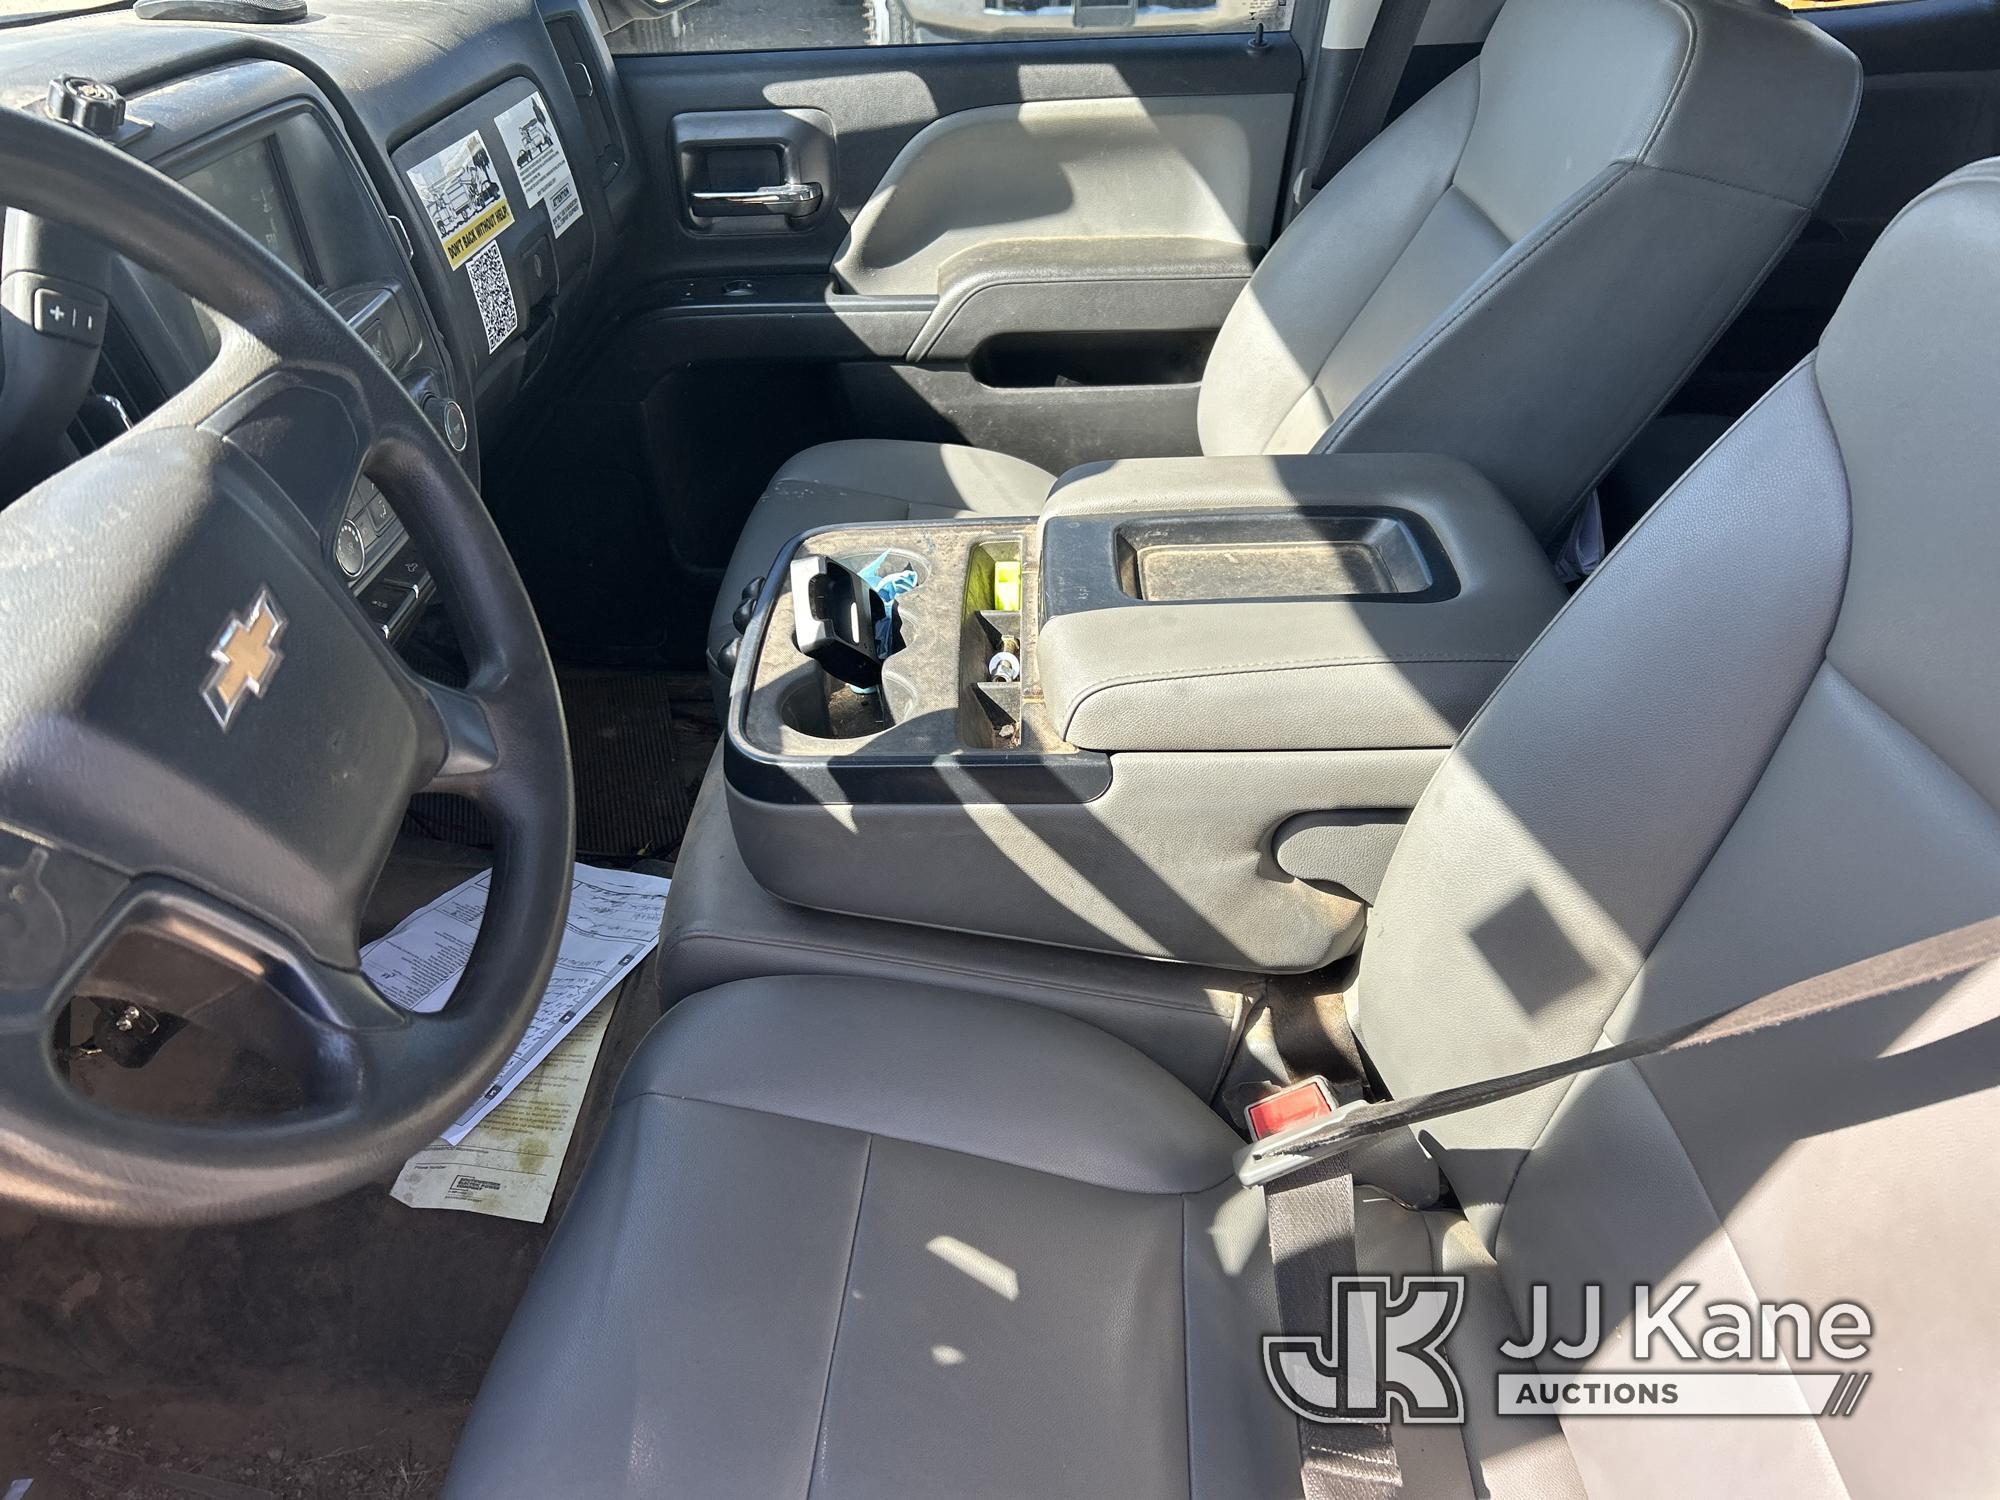 (Waxahachie, TX) 2018 Chevrolet Silverado 1500 4x4 Extended-Cab Pickup Truck Runs & Moves) (Check En